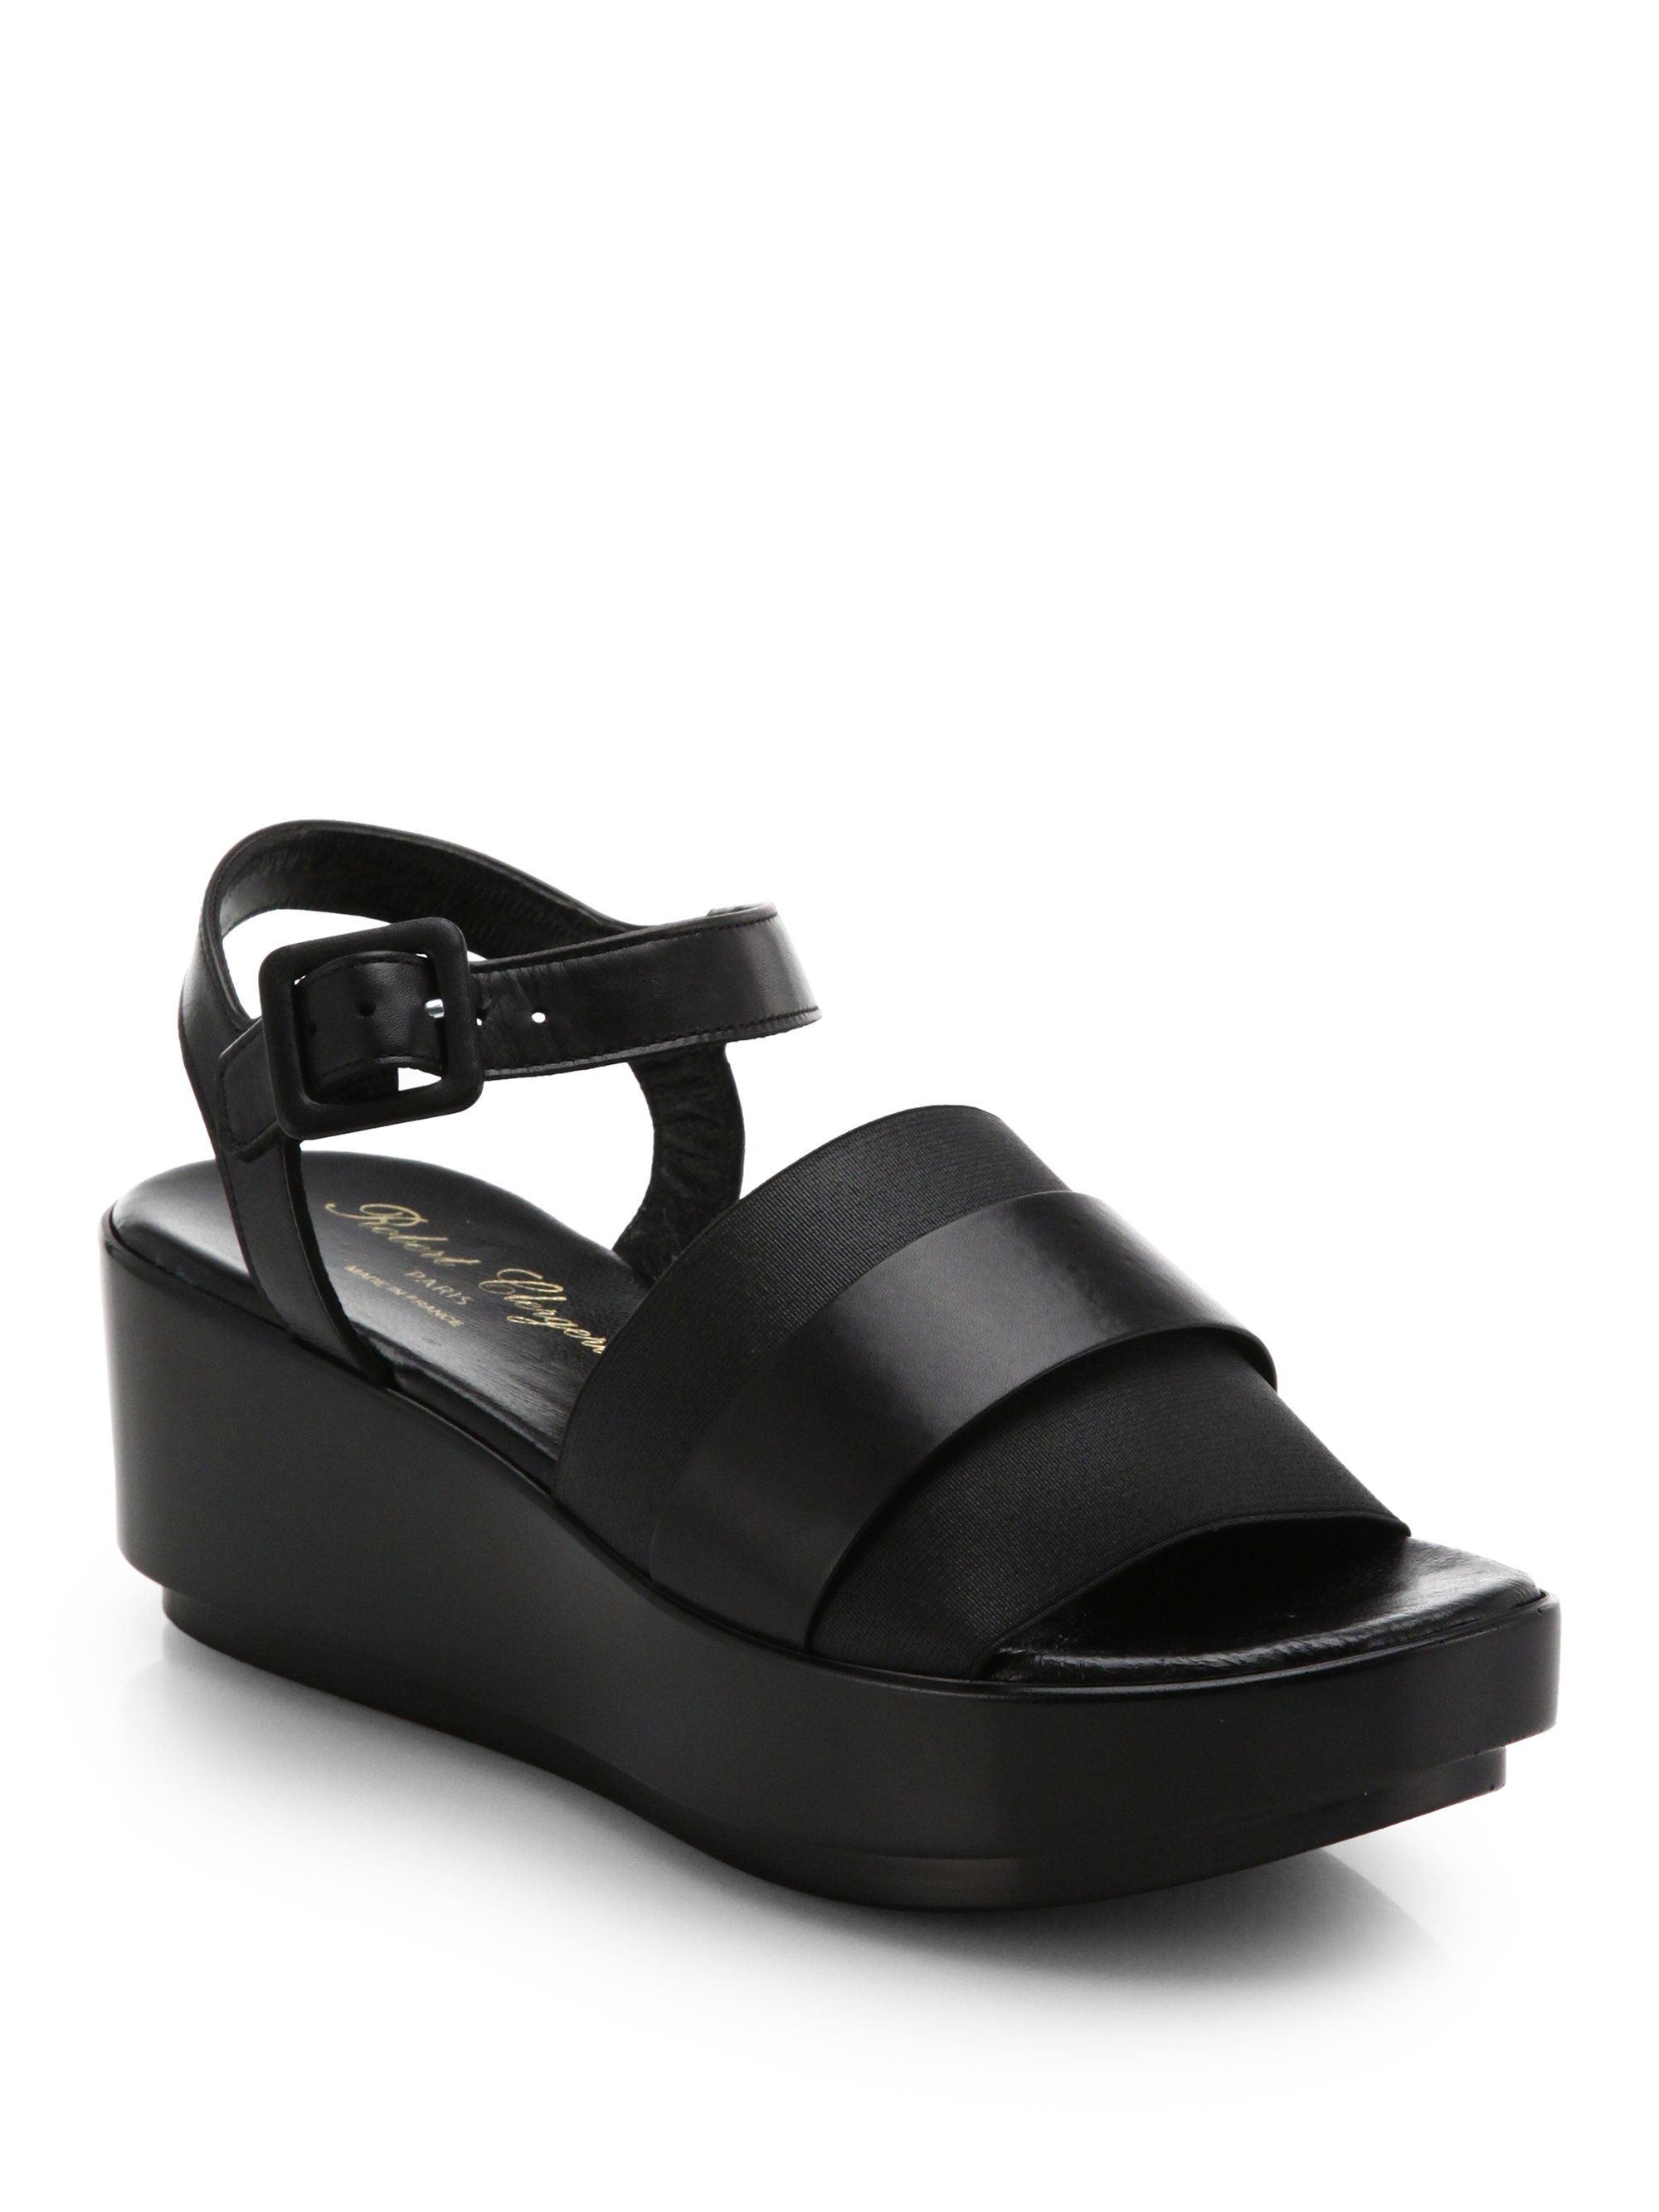 Robert clergerie Leather & Elastic Platform Sandals in Black | Lyst